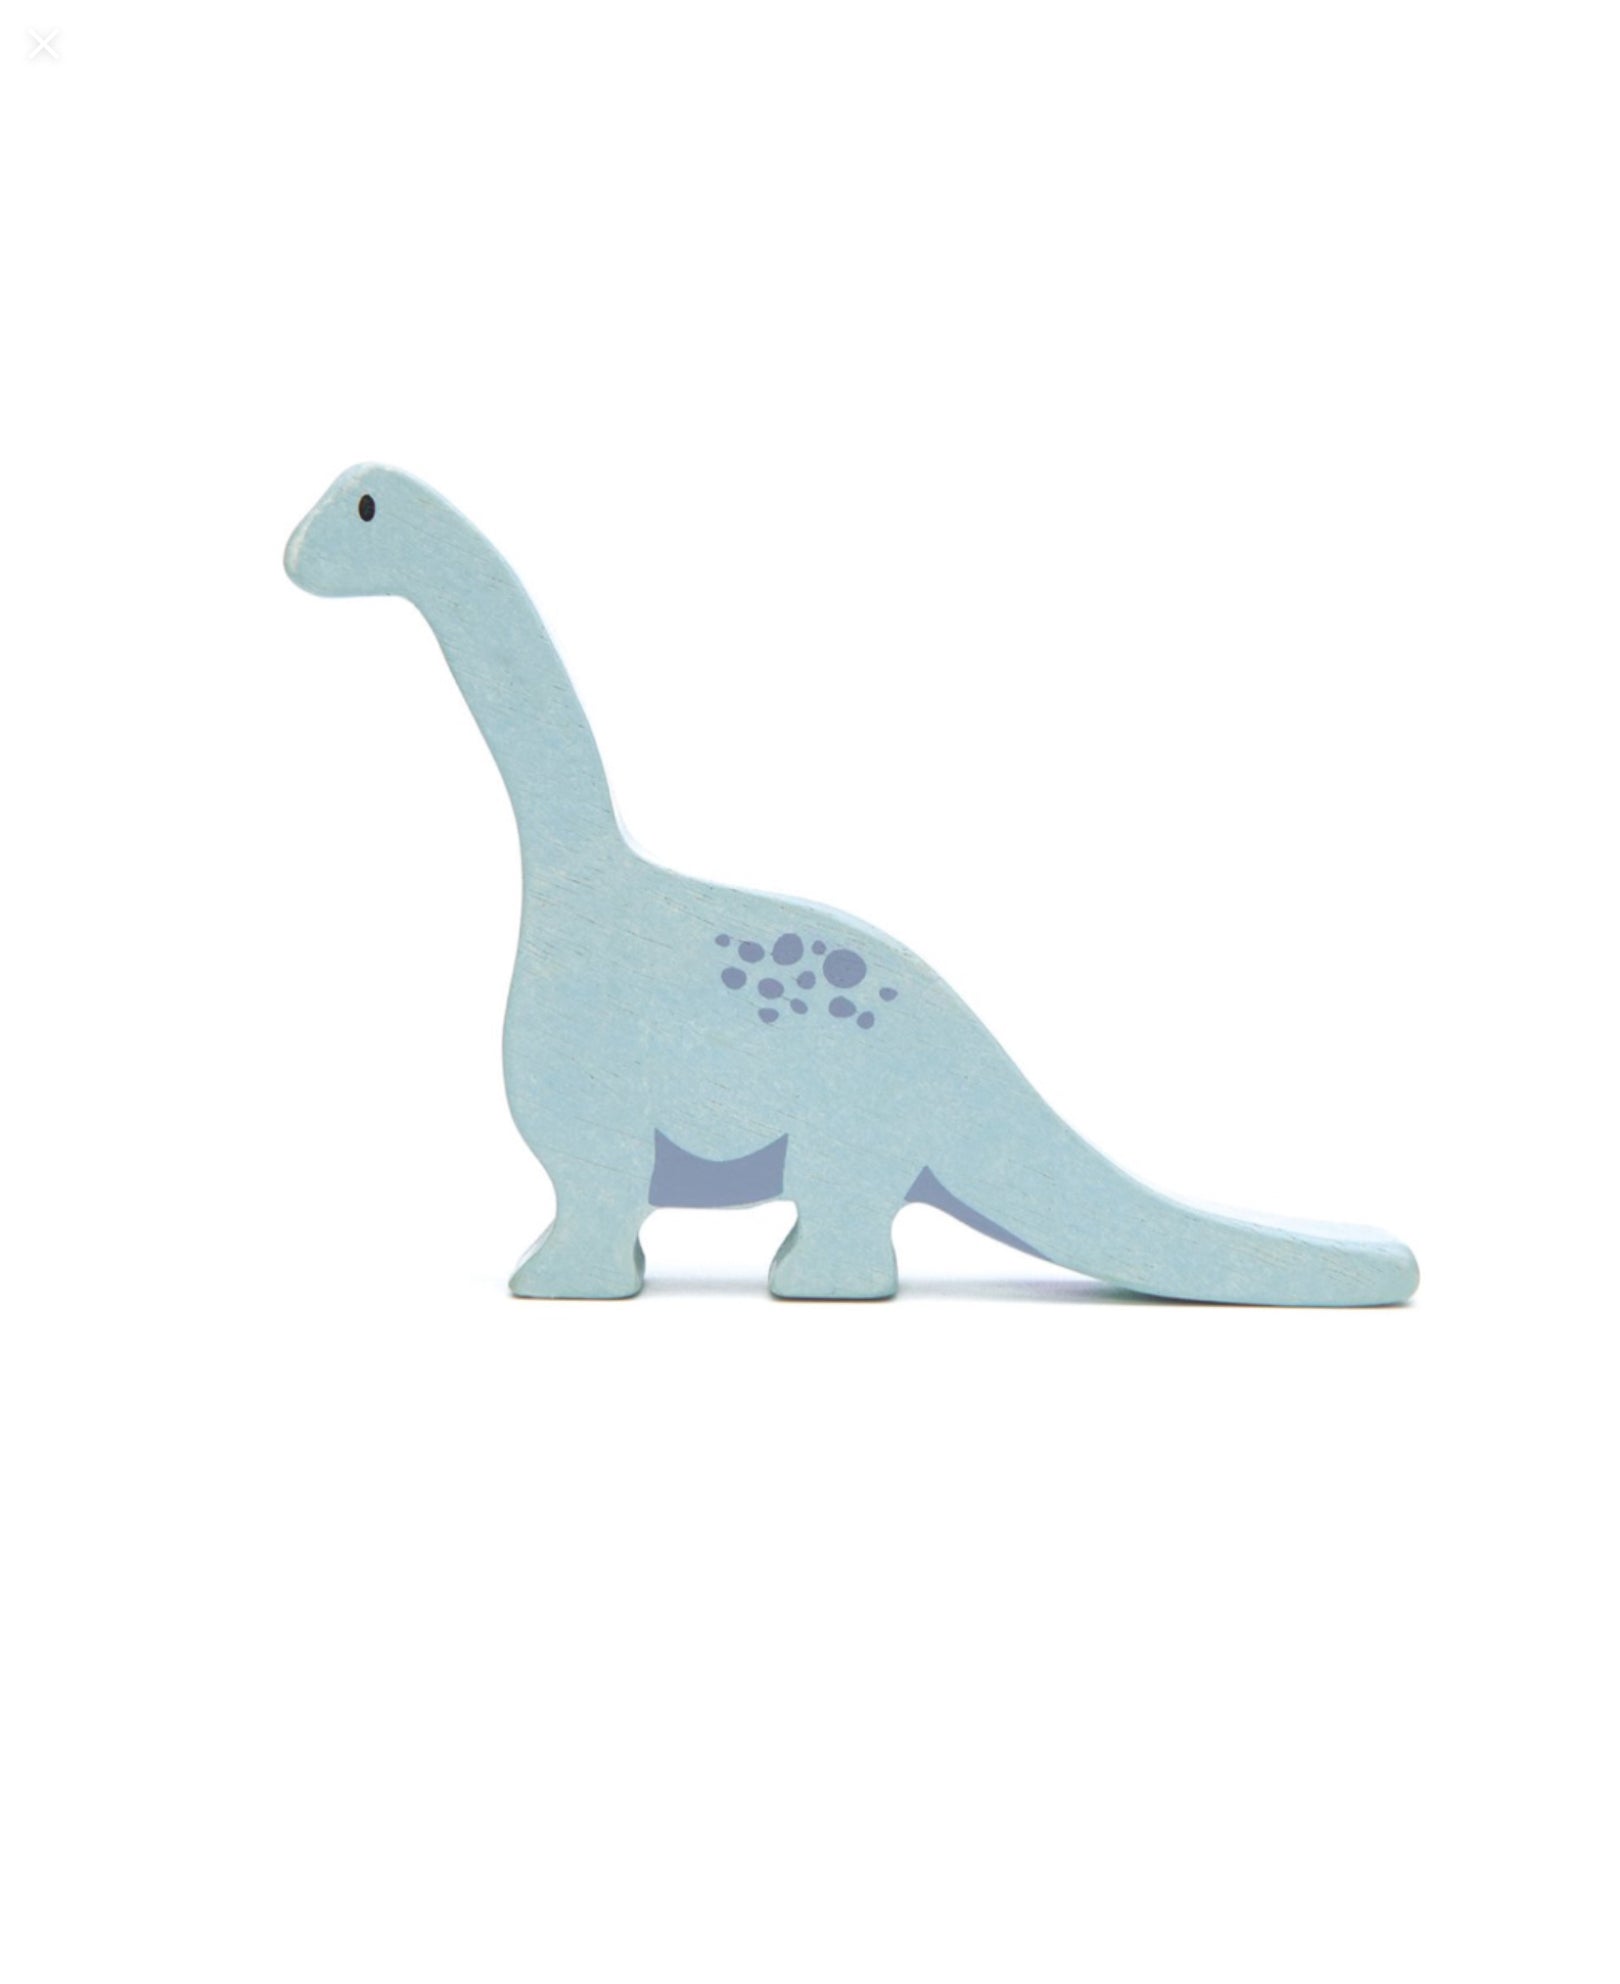 Tender Leaf Toys Brontosaurus  Wooden Dinosaur Toy